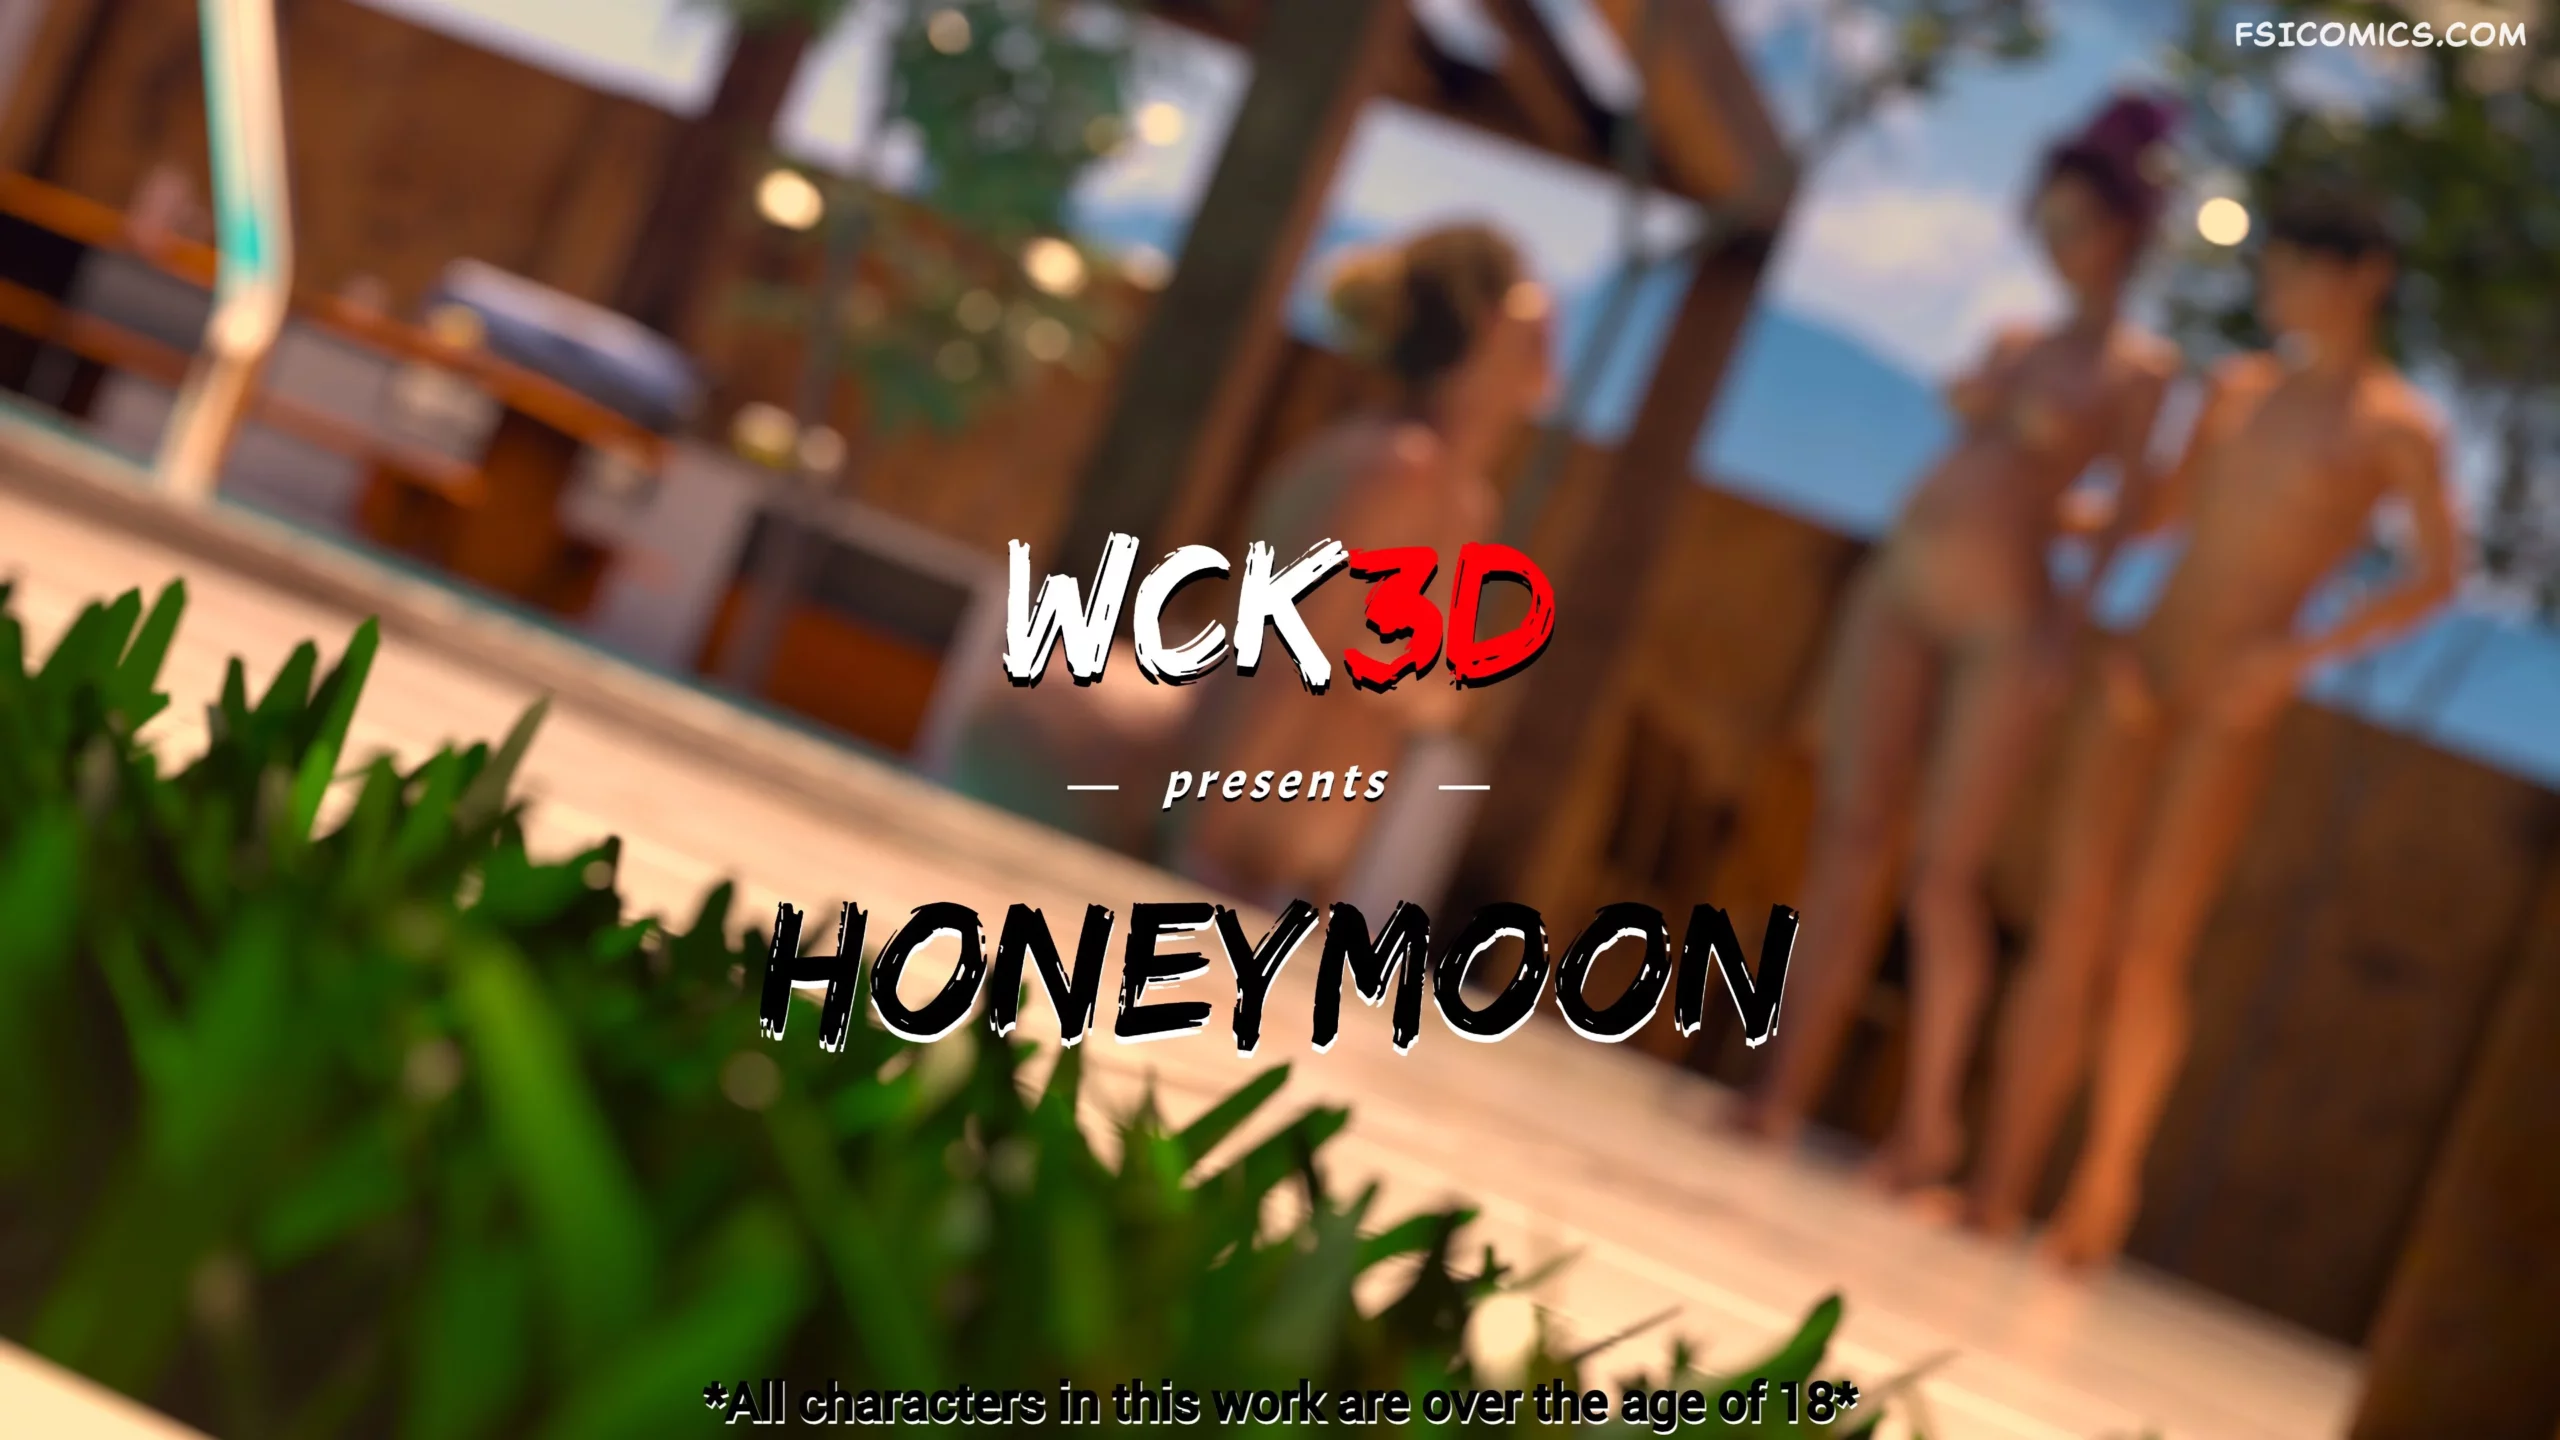 Between Us - Honeymoon - WCK3D - 19 - FSIComics